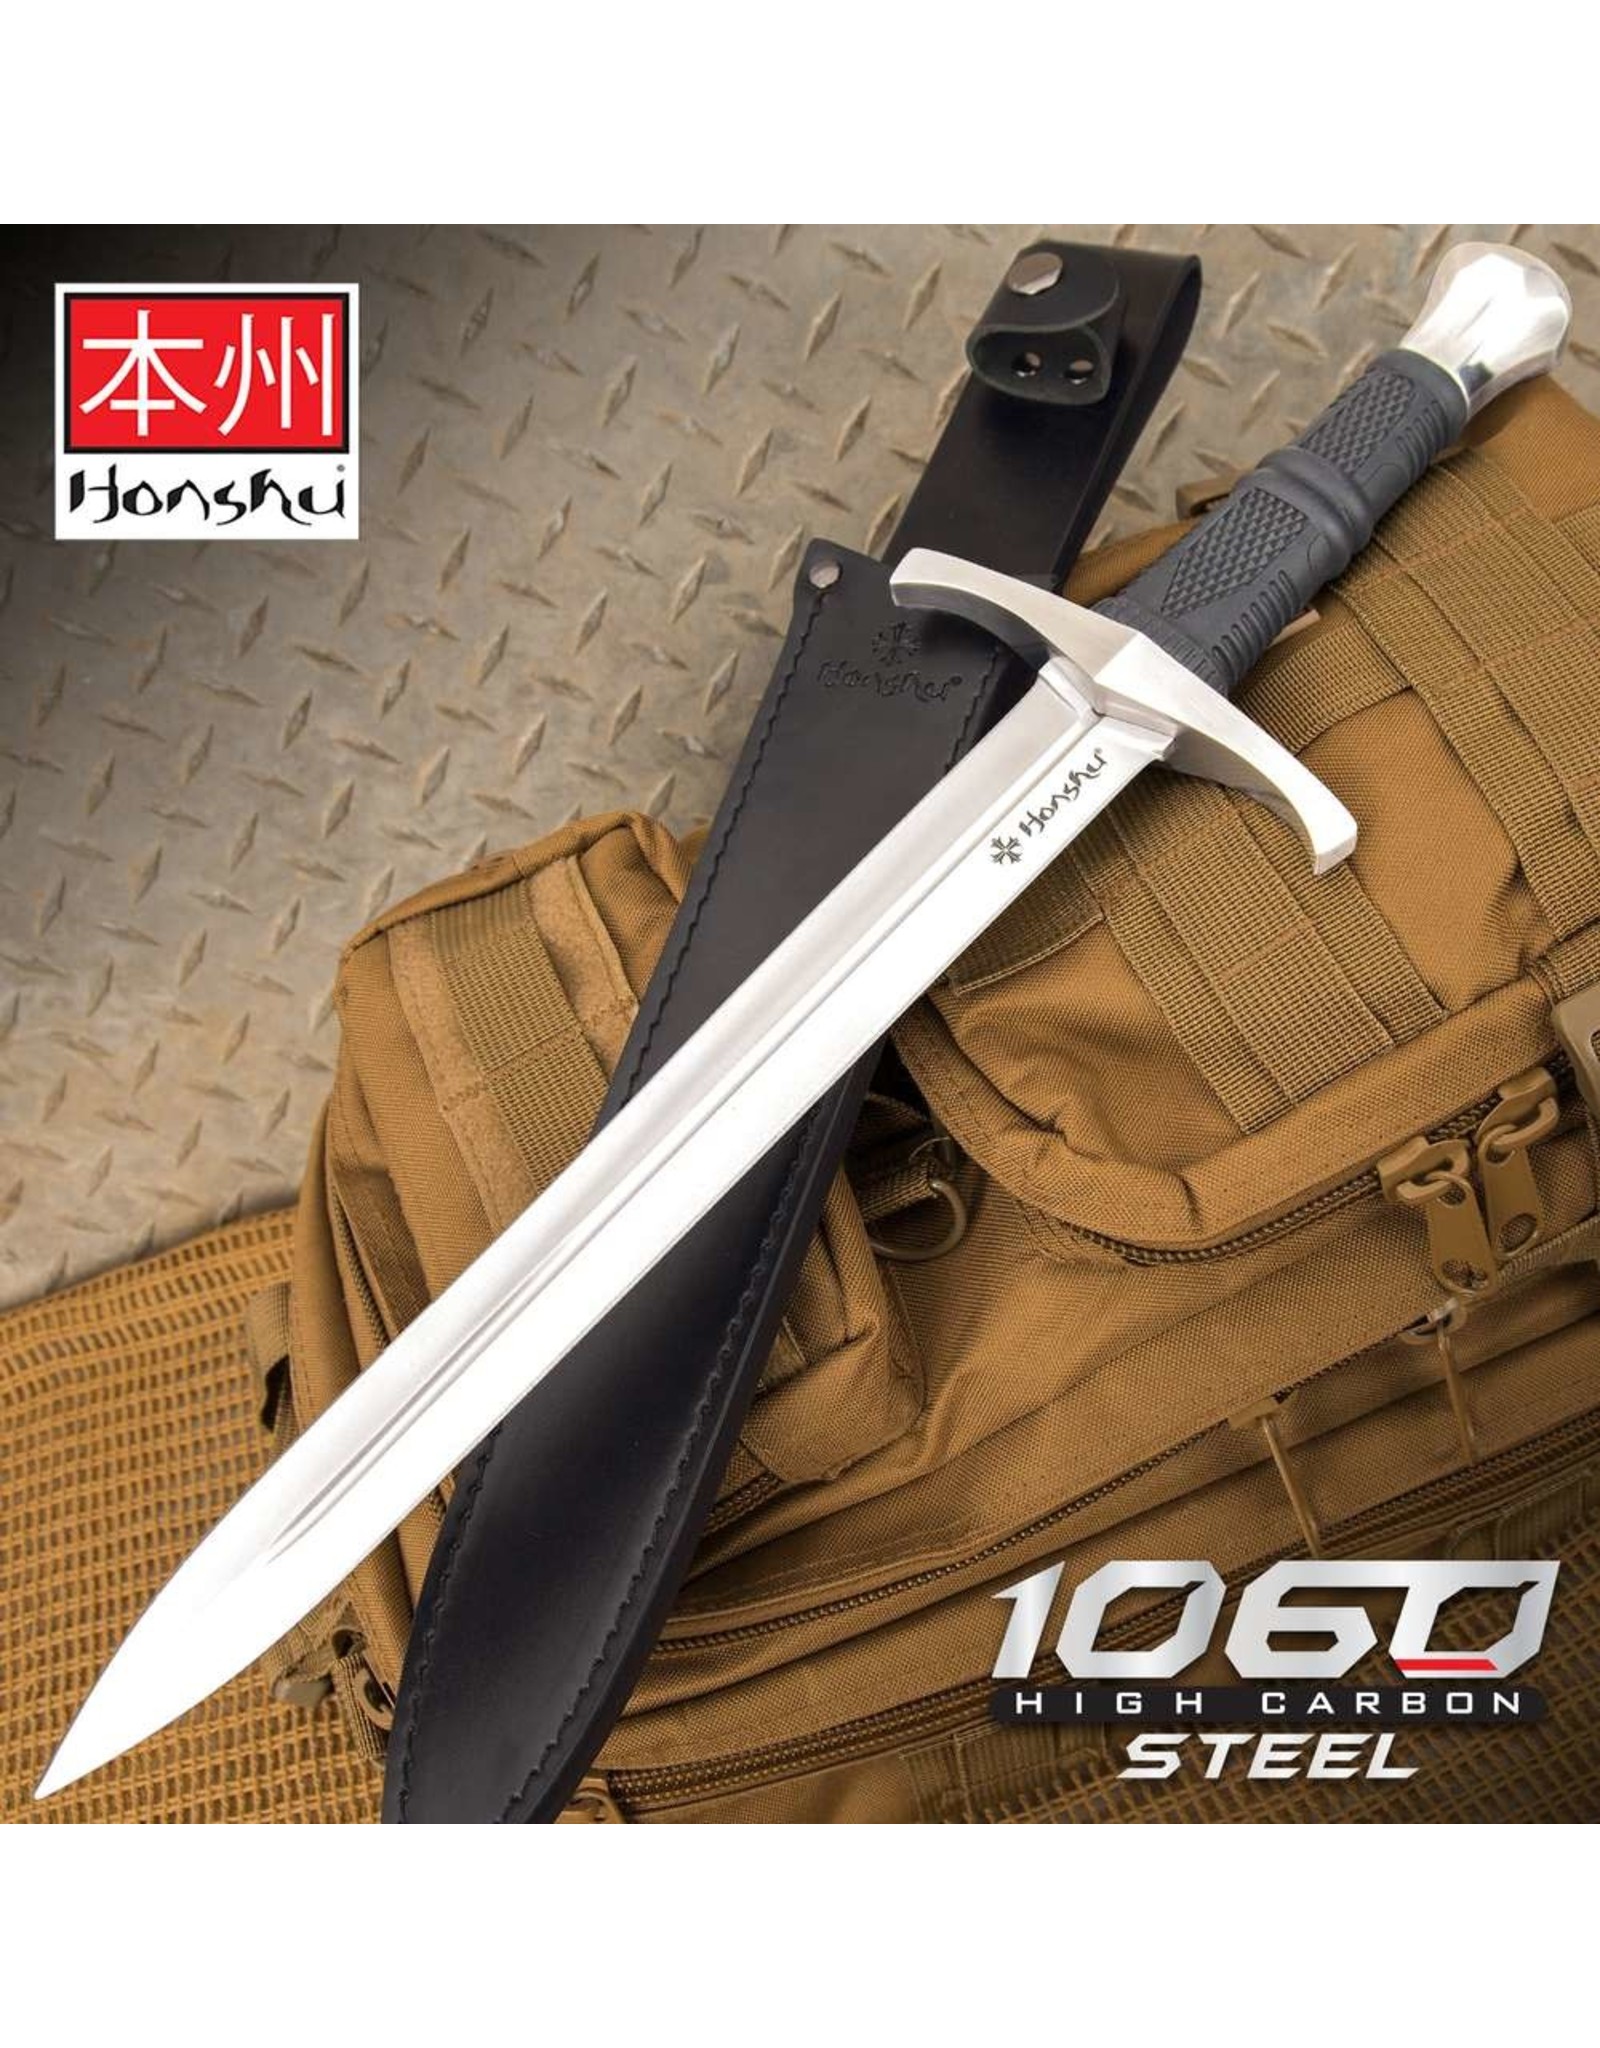 Honshu Honshu Crusader Quillon Dagger With Sheath UC3430